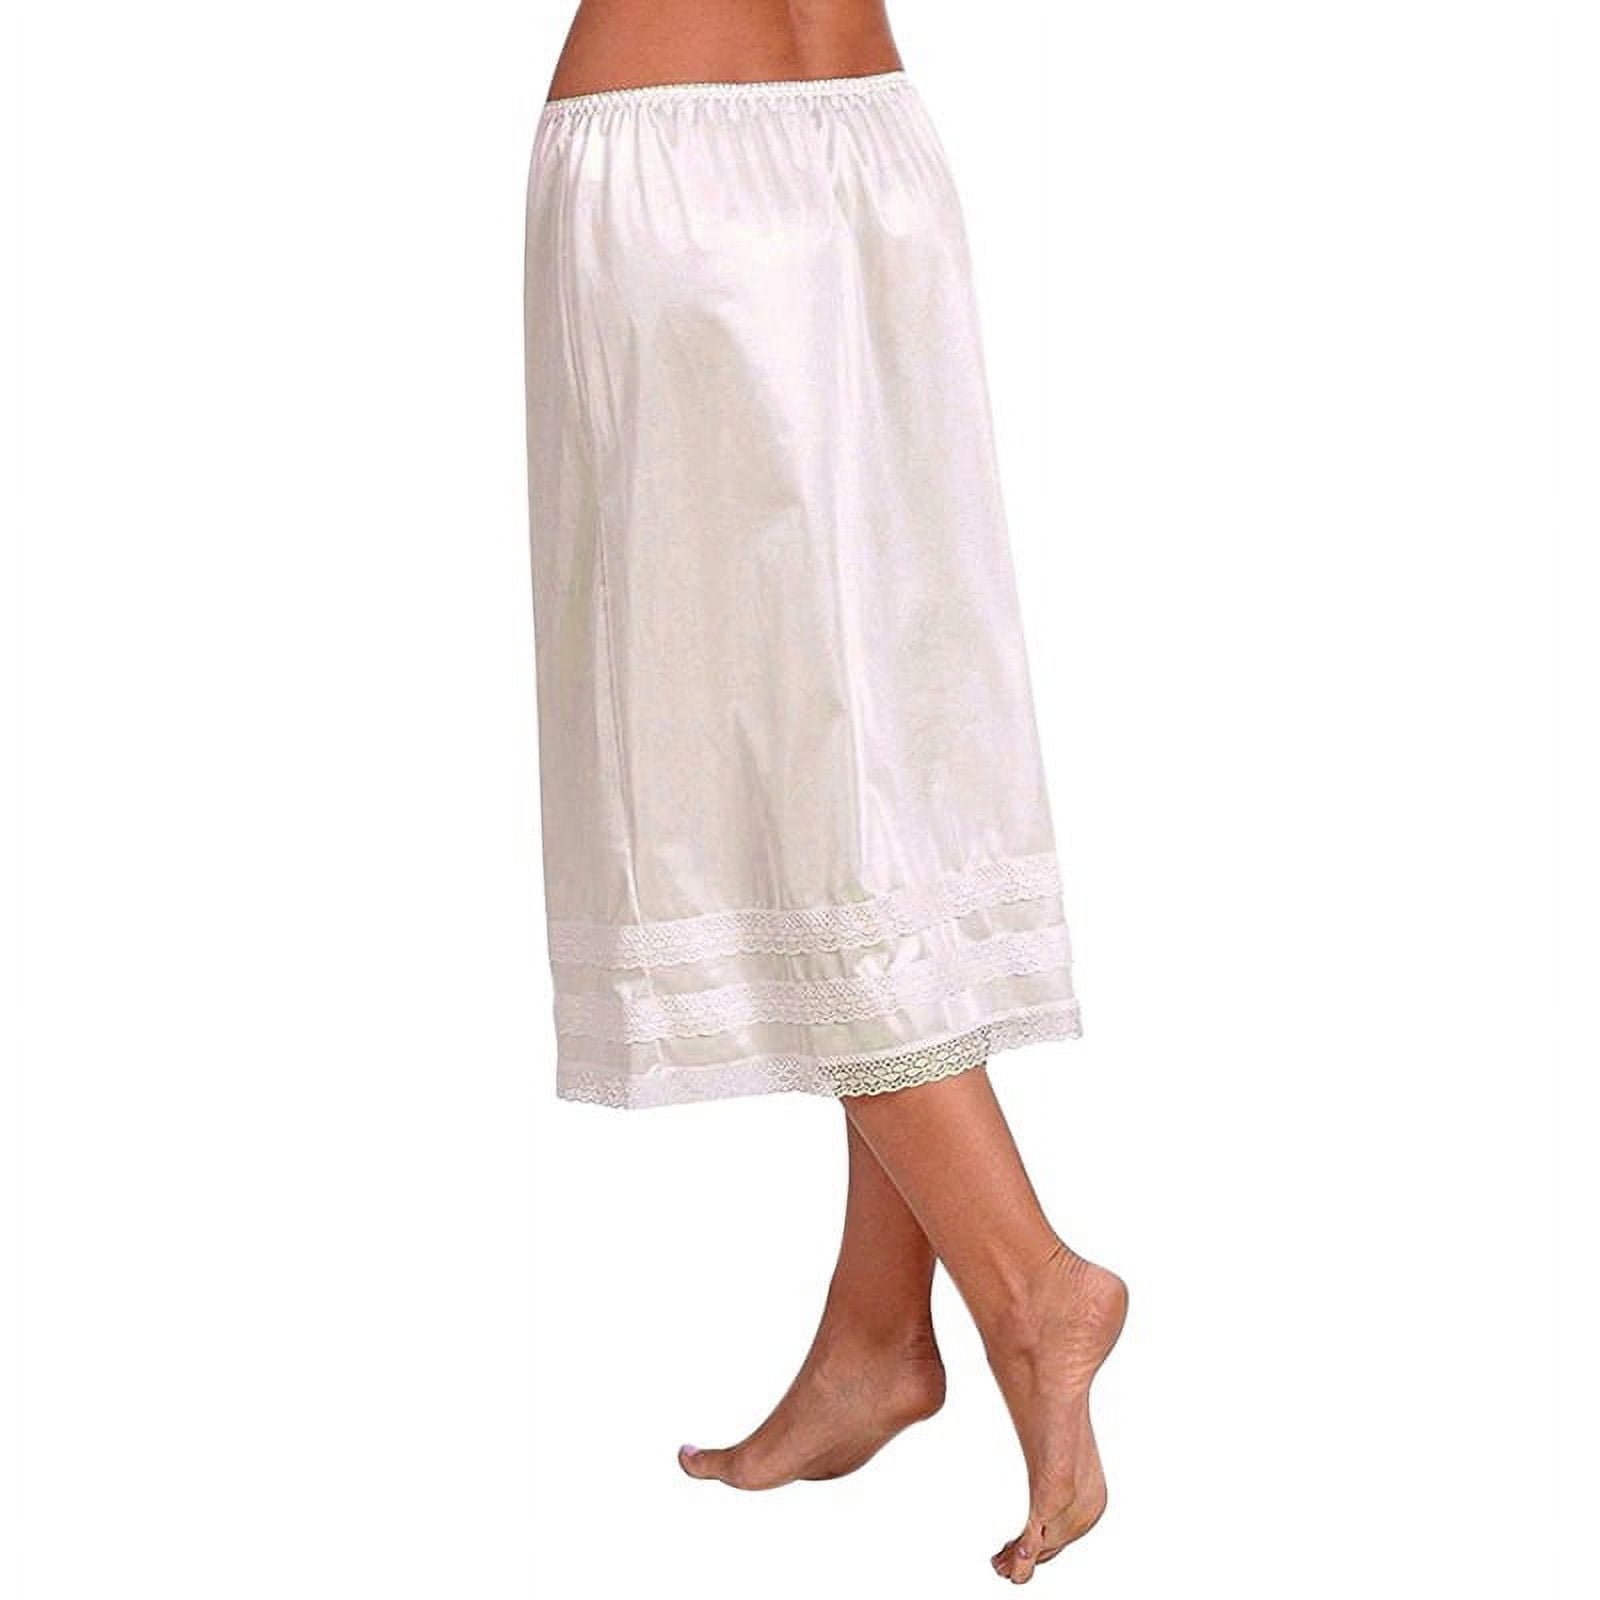 Homgro Women's Shapewear Half Slips Under Dress Shaper Tight Skirt  Undergarments Seamless High Waist Nude Small